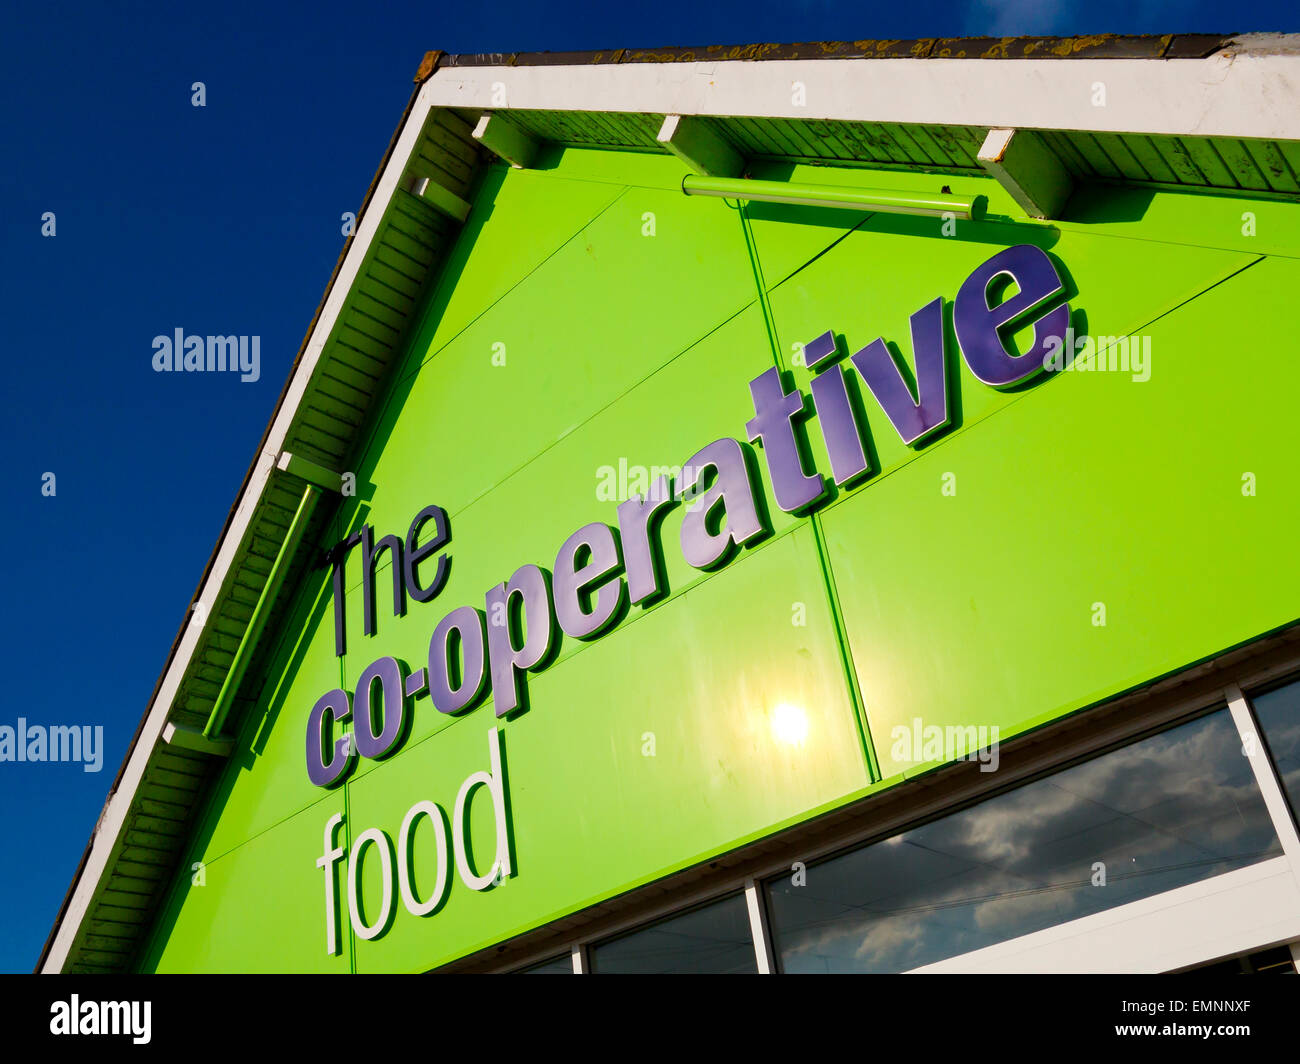 Co-operative Food supermarket exterior in Seaton Devon UK Stock Photo